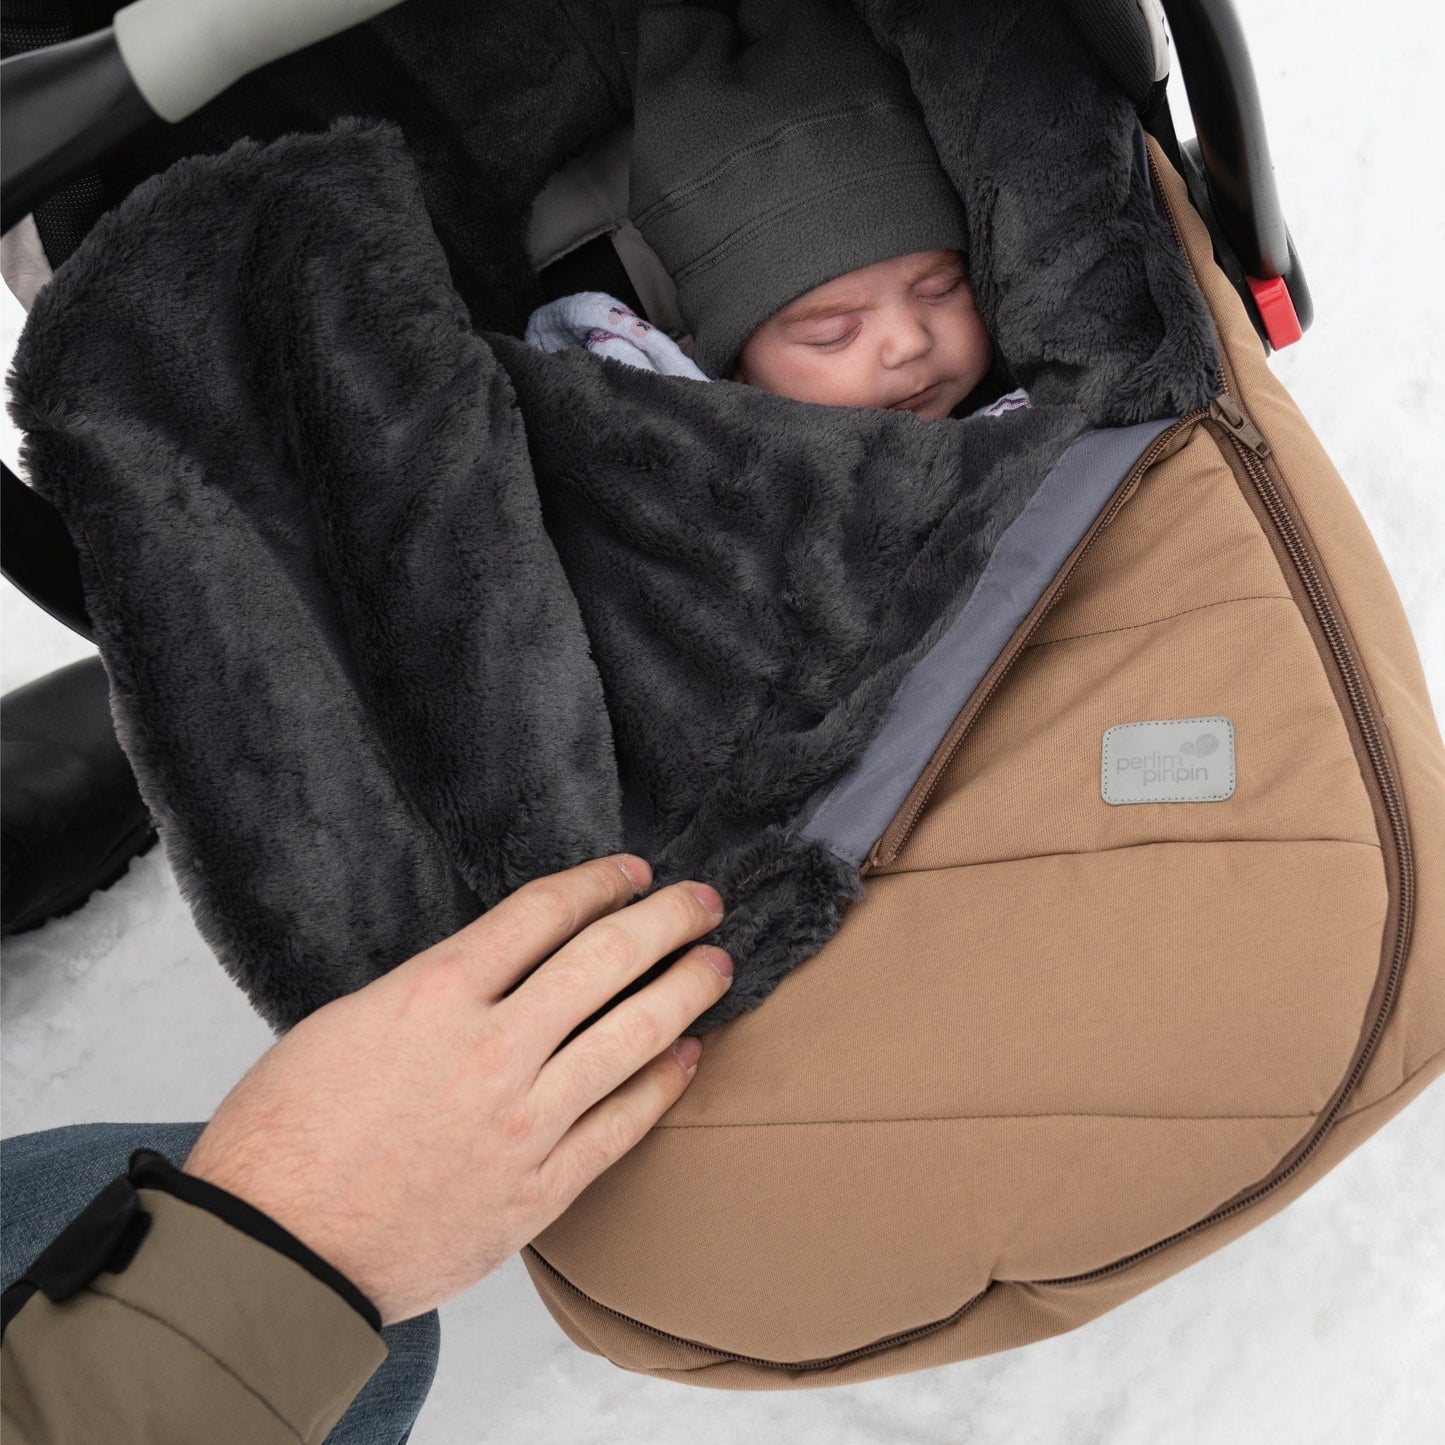 Infant winter bunting bag - Nebula textured